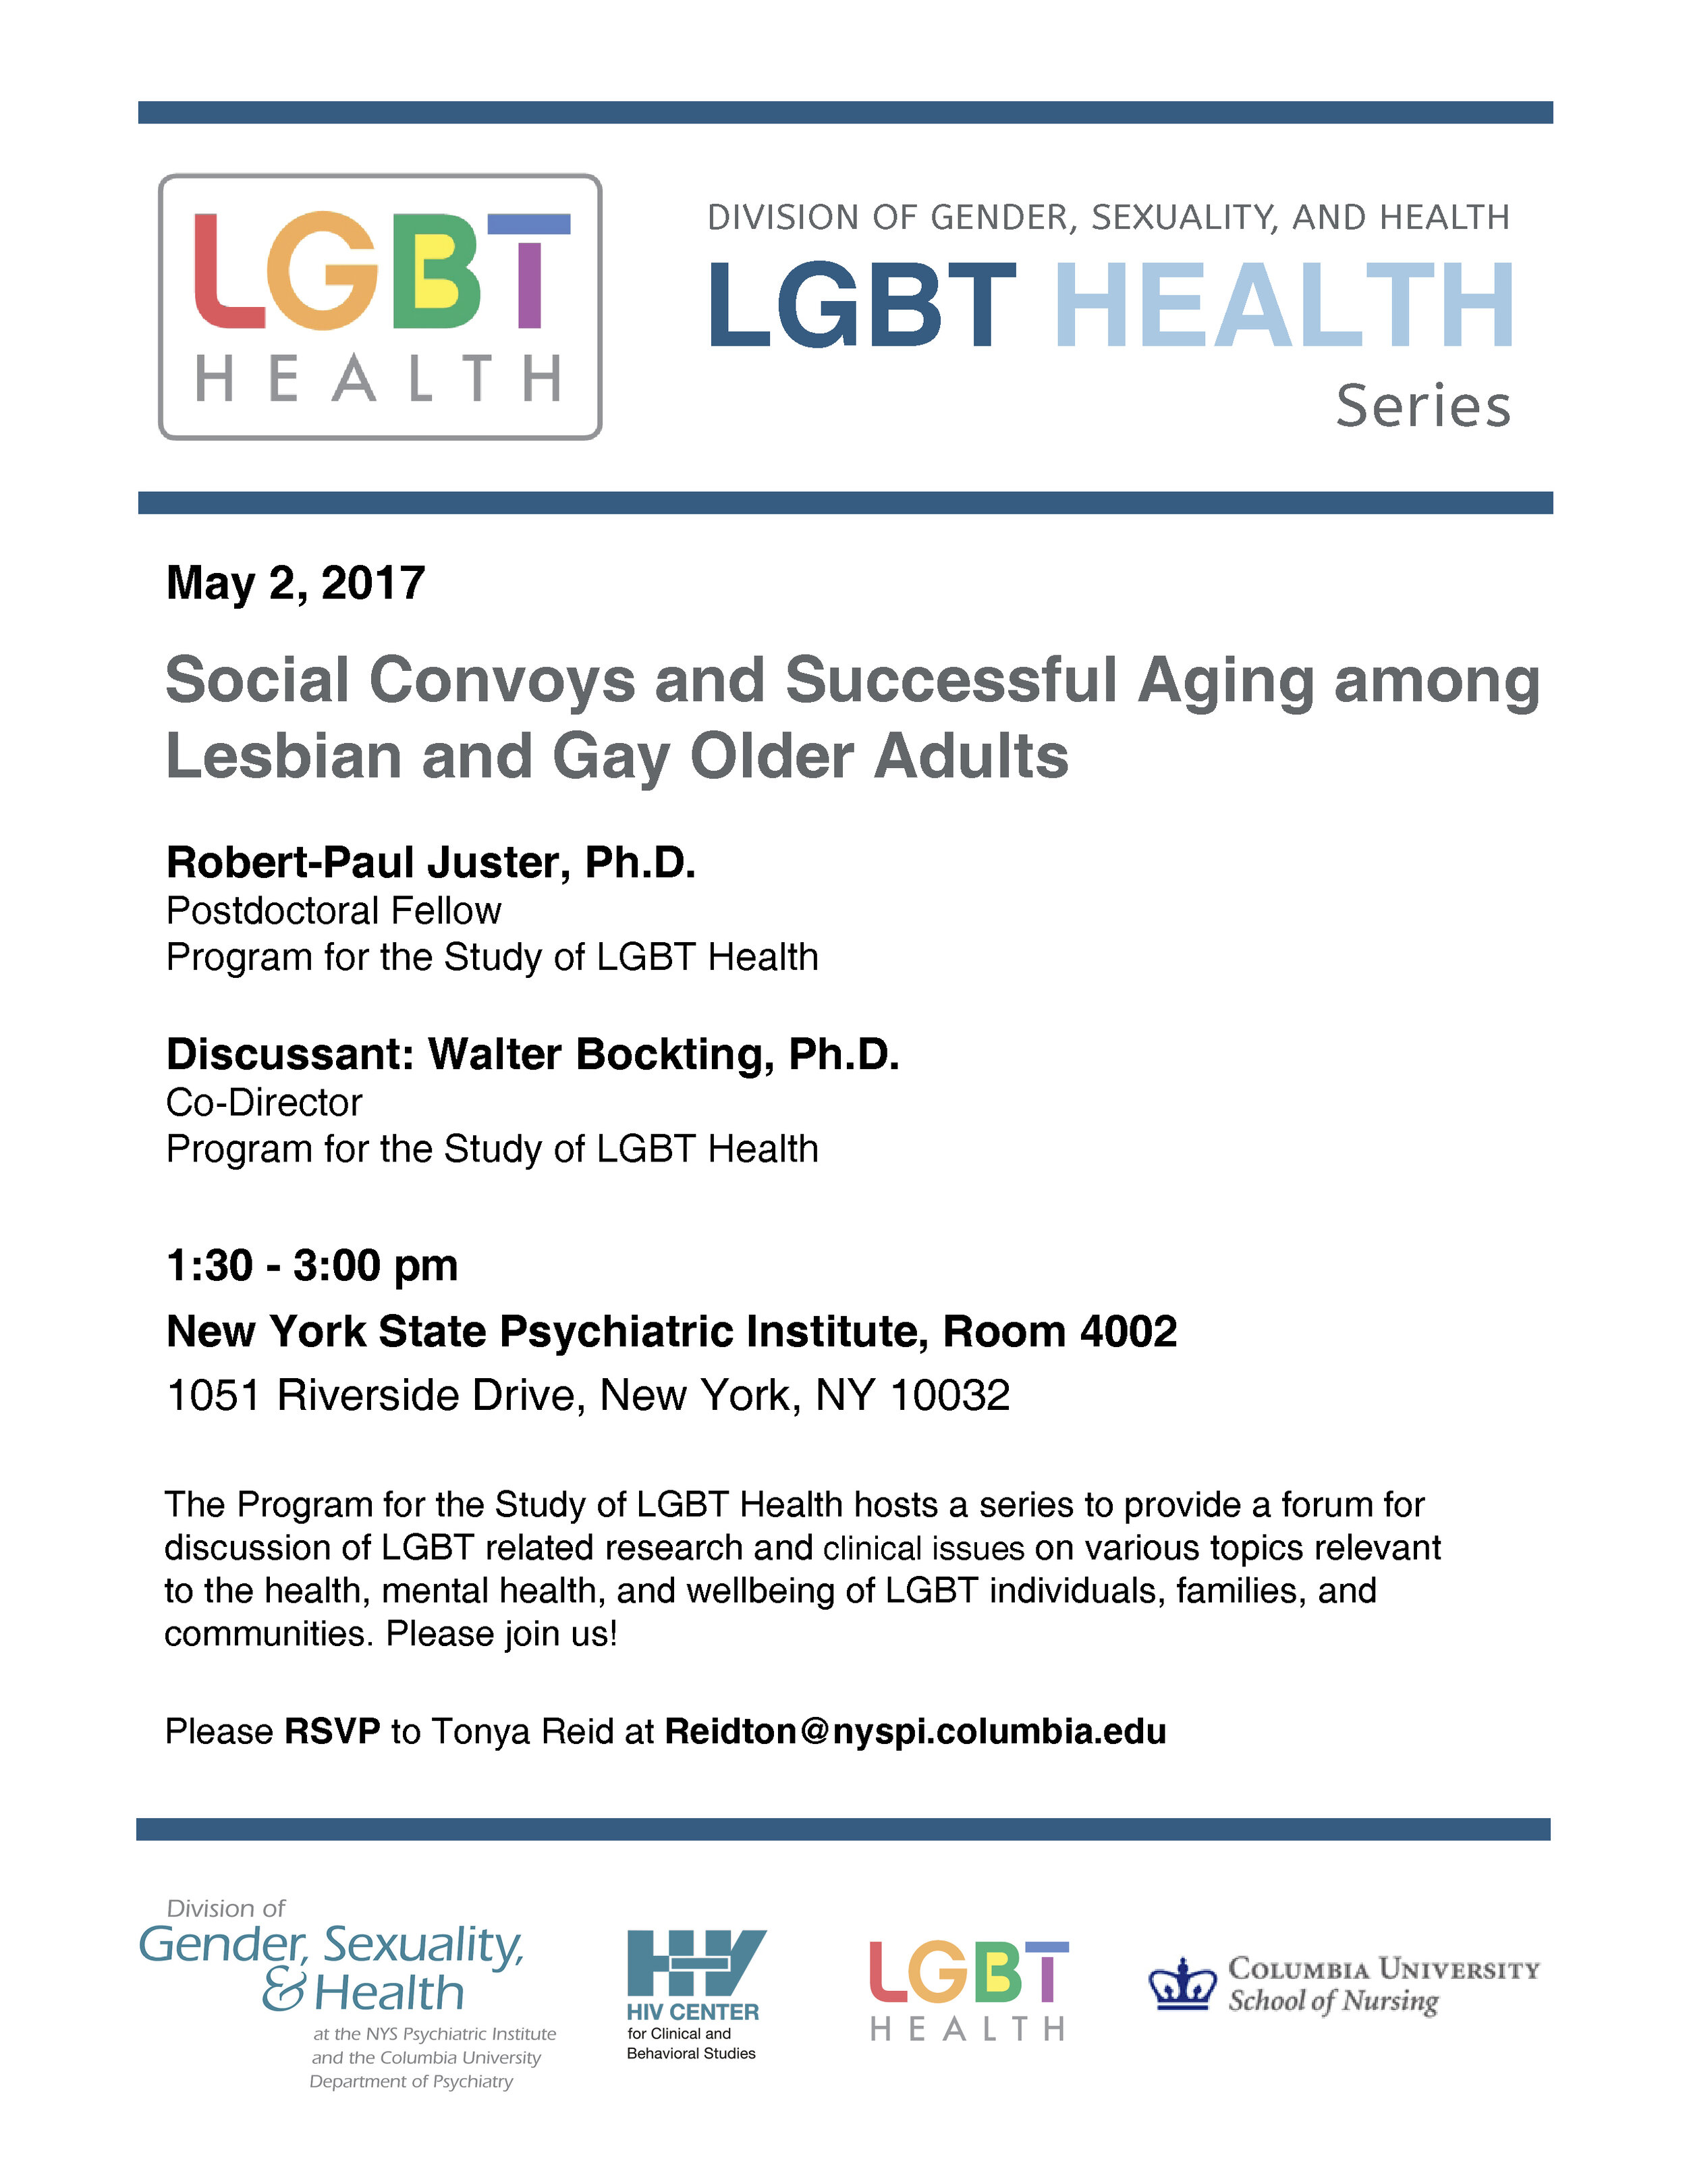 LGBT Health Series May 2 2017.jpg